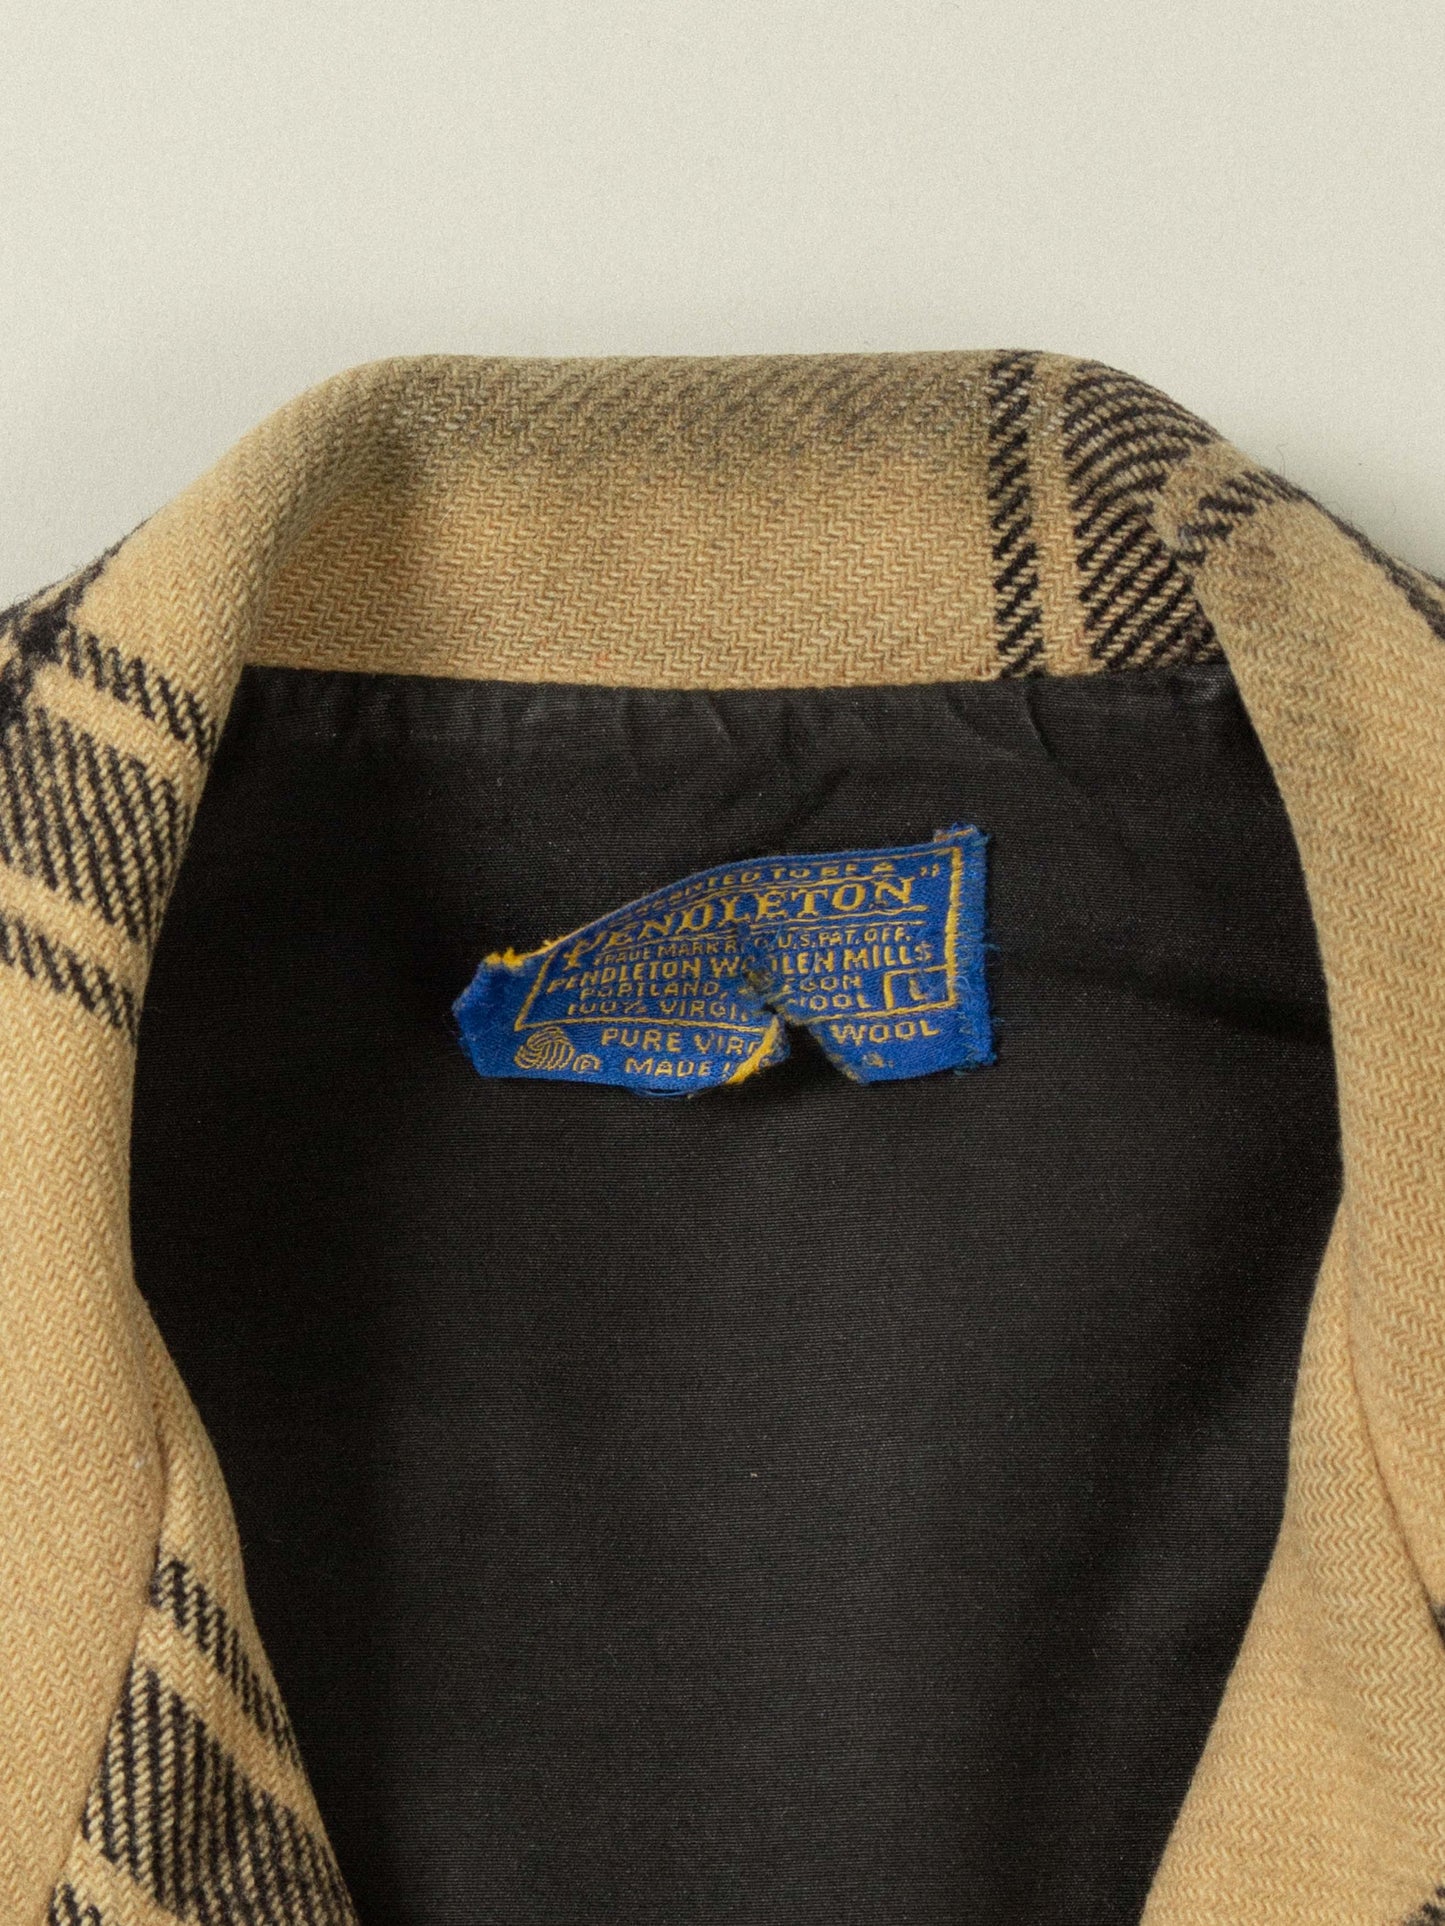 Vtg 1960s Pendleton Wool Plaid Hunting Jacket - Made in USA (M/L)